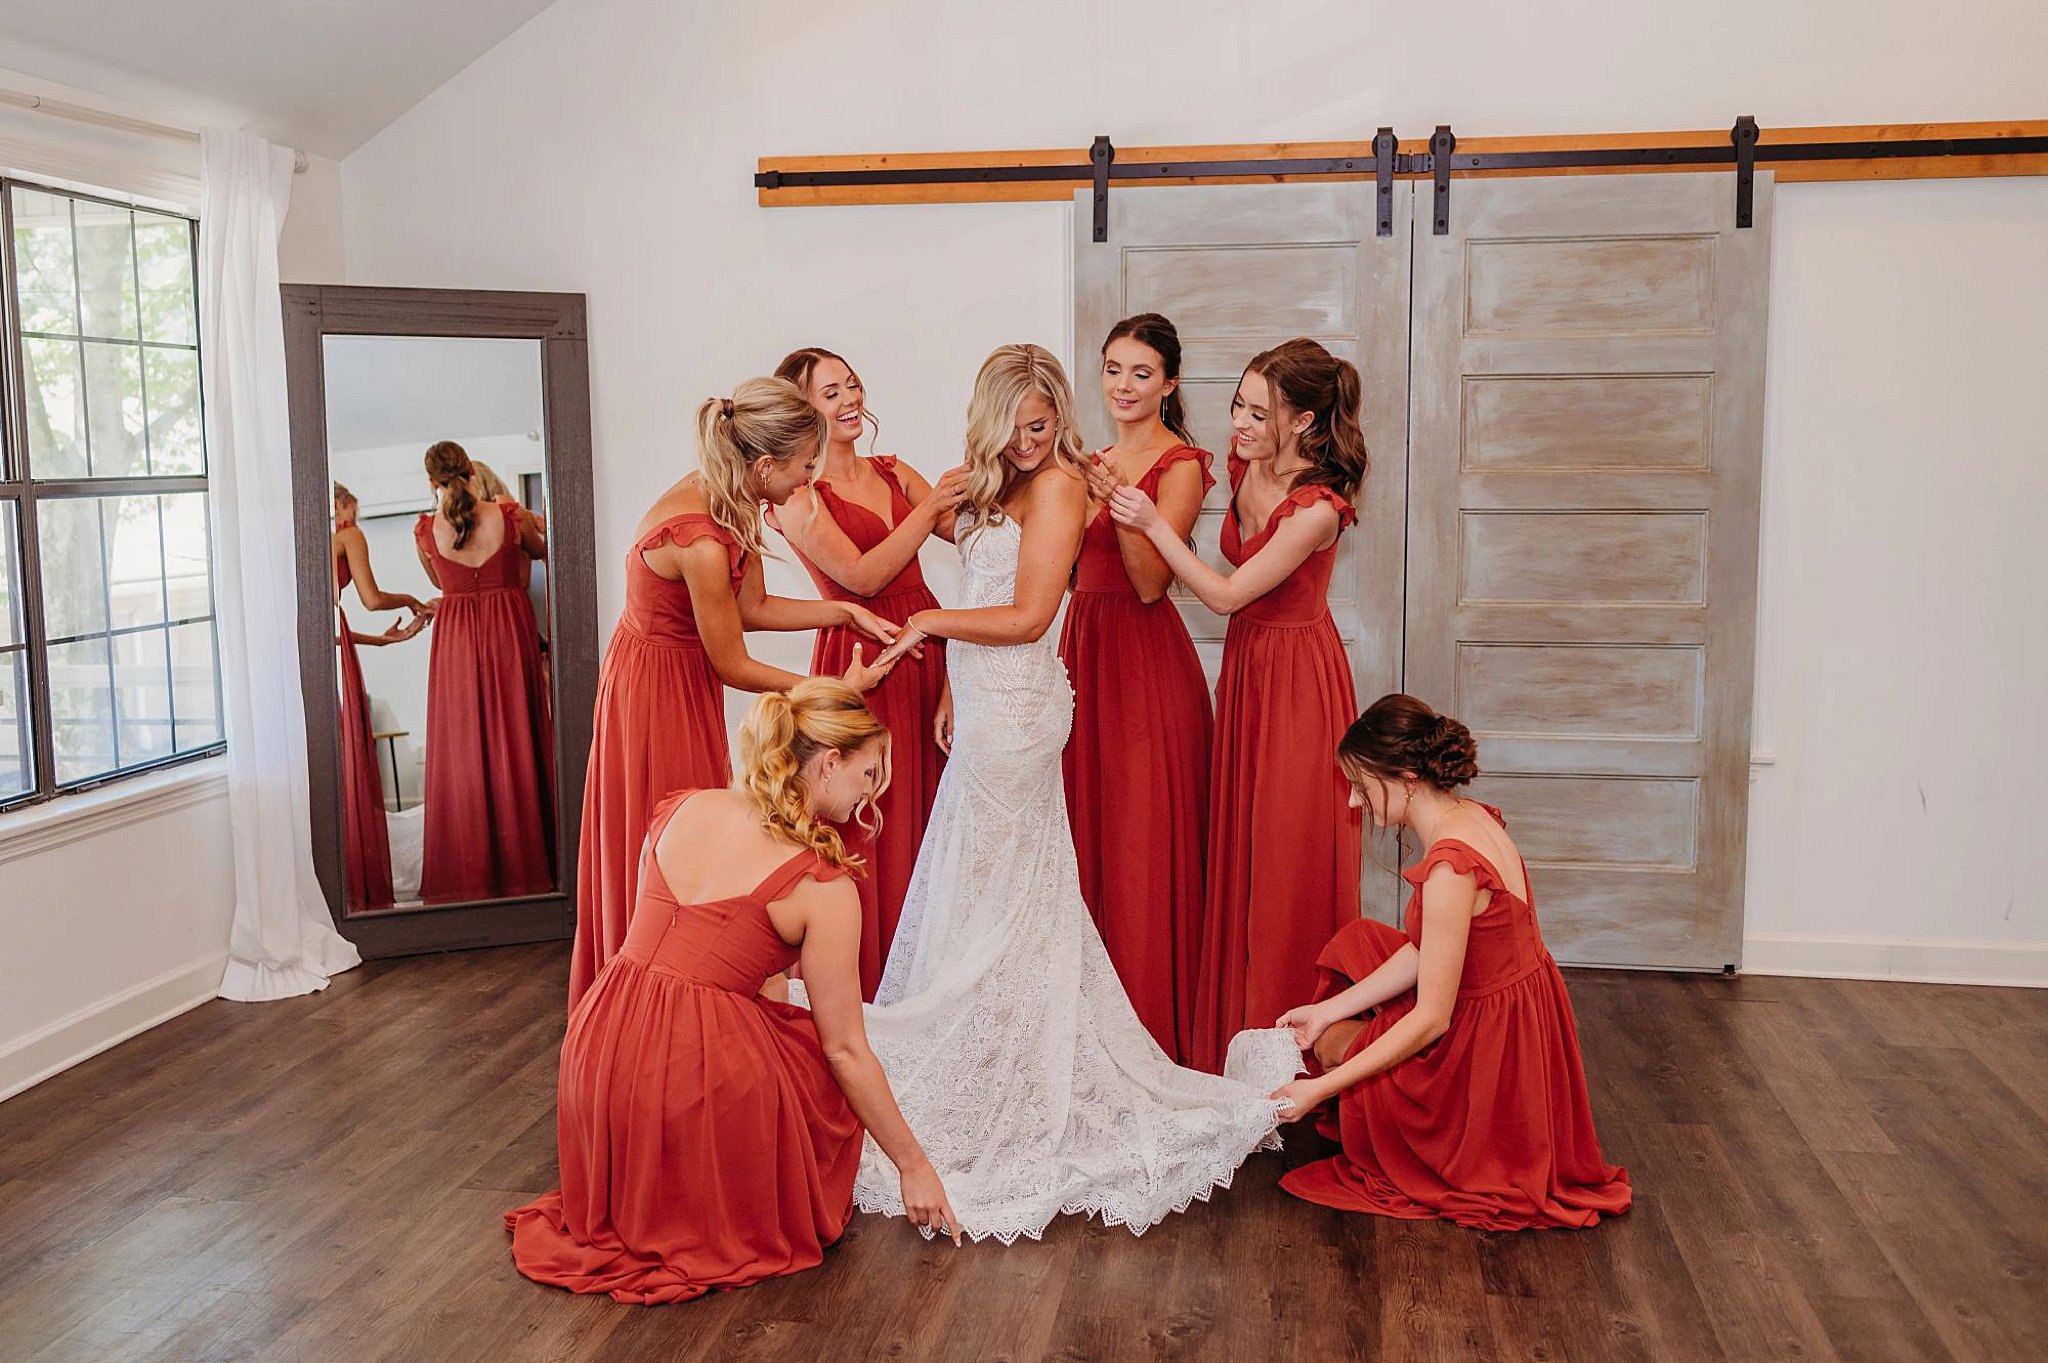 bridesmaids in maroon dressed surrounding bride and helping adjust her looks